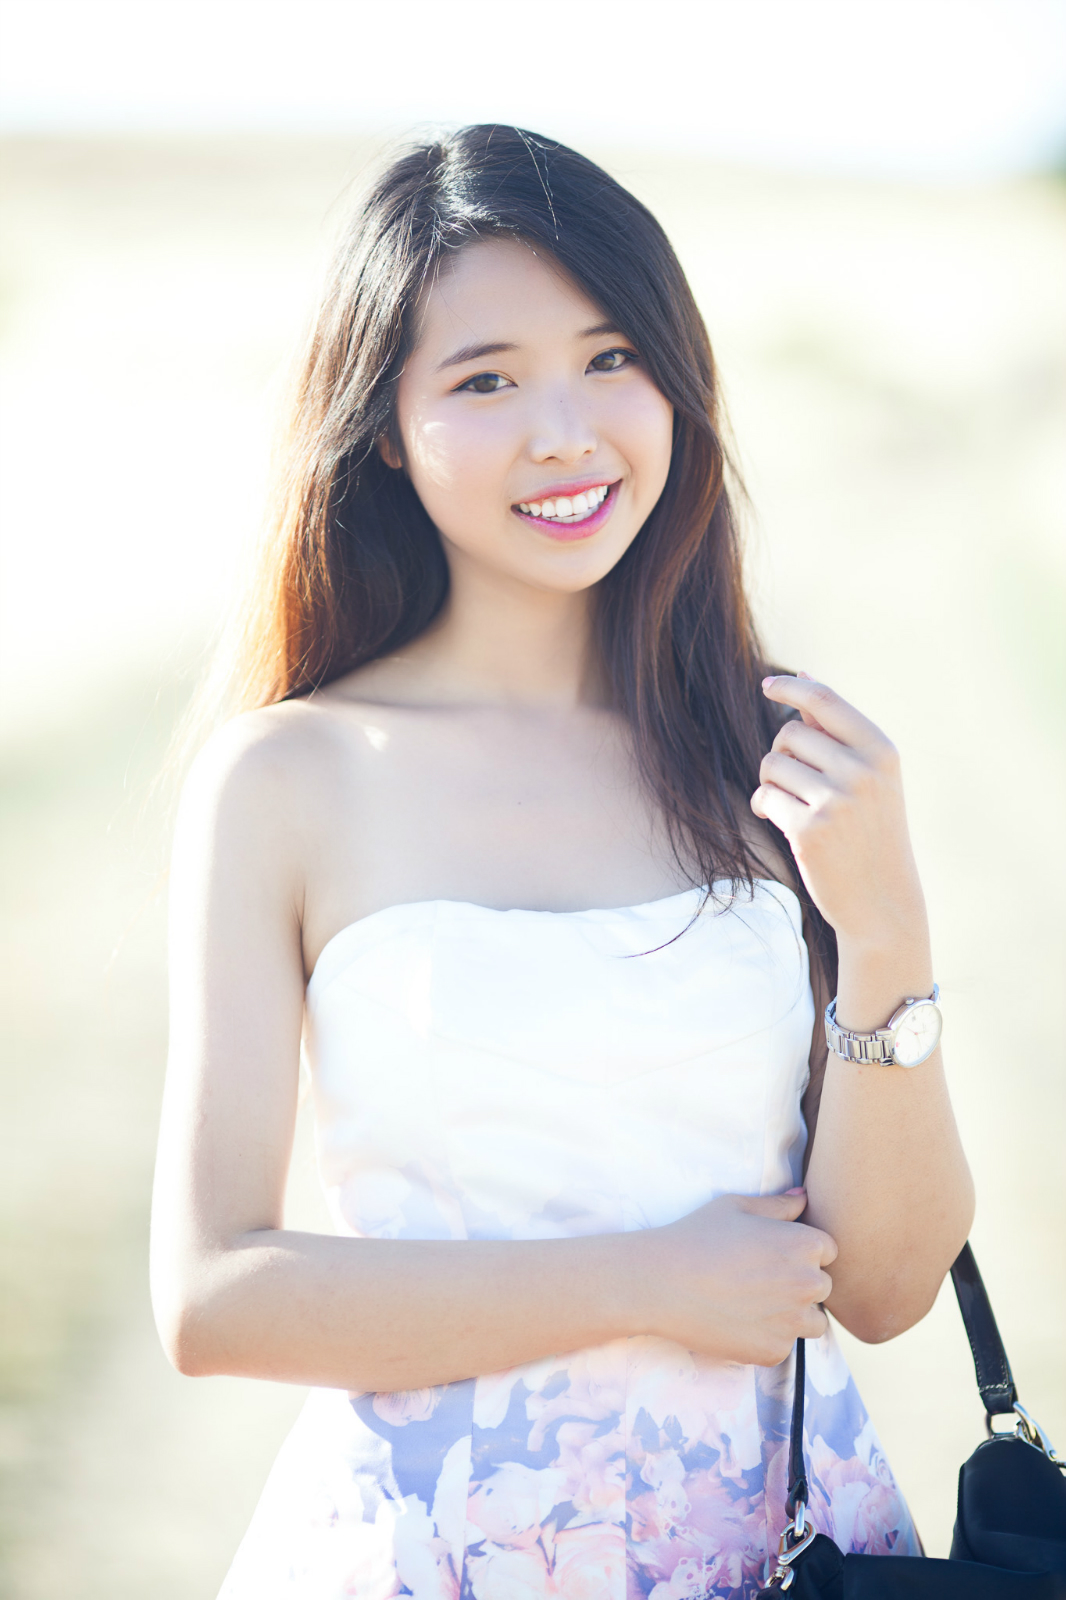 ally gong tobi model smile asian girl korean chinese inspiration ... picture image